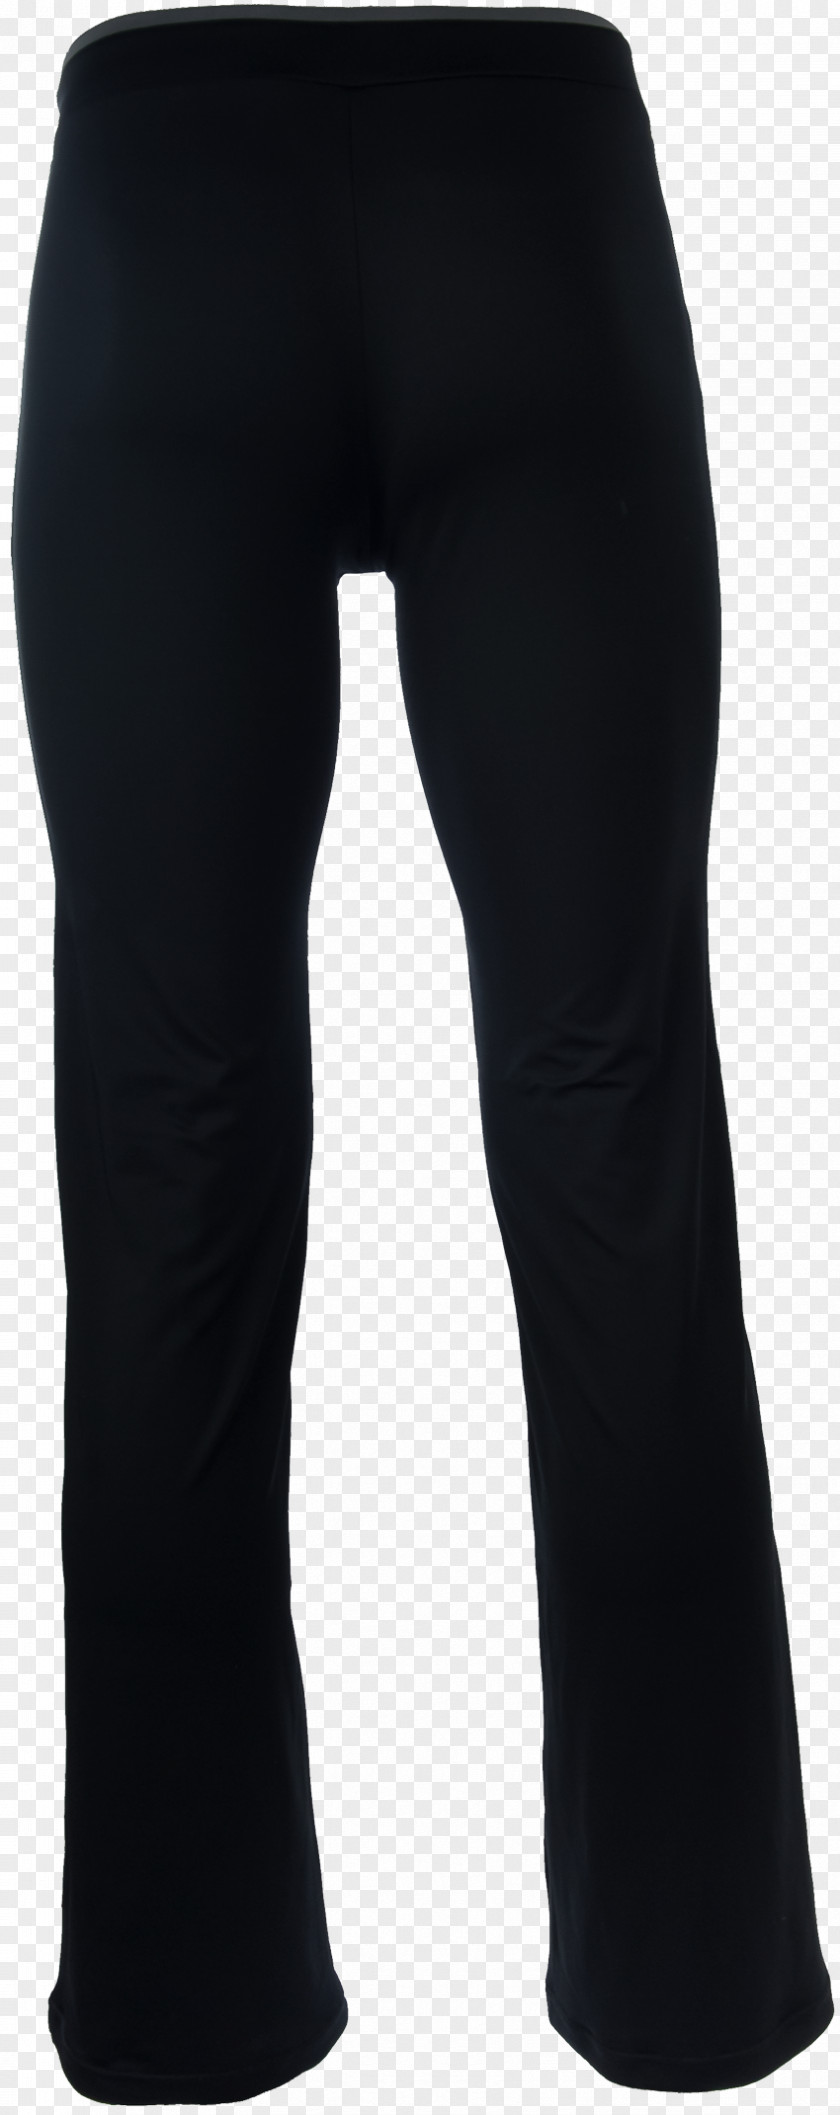 Zipper Pants Levi Strauss & Co. Clothing Shorts PNG